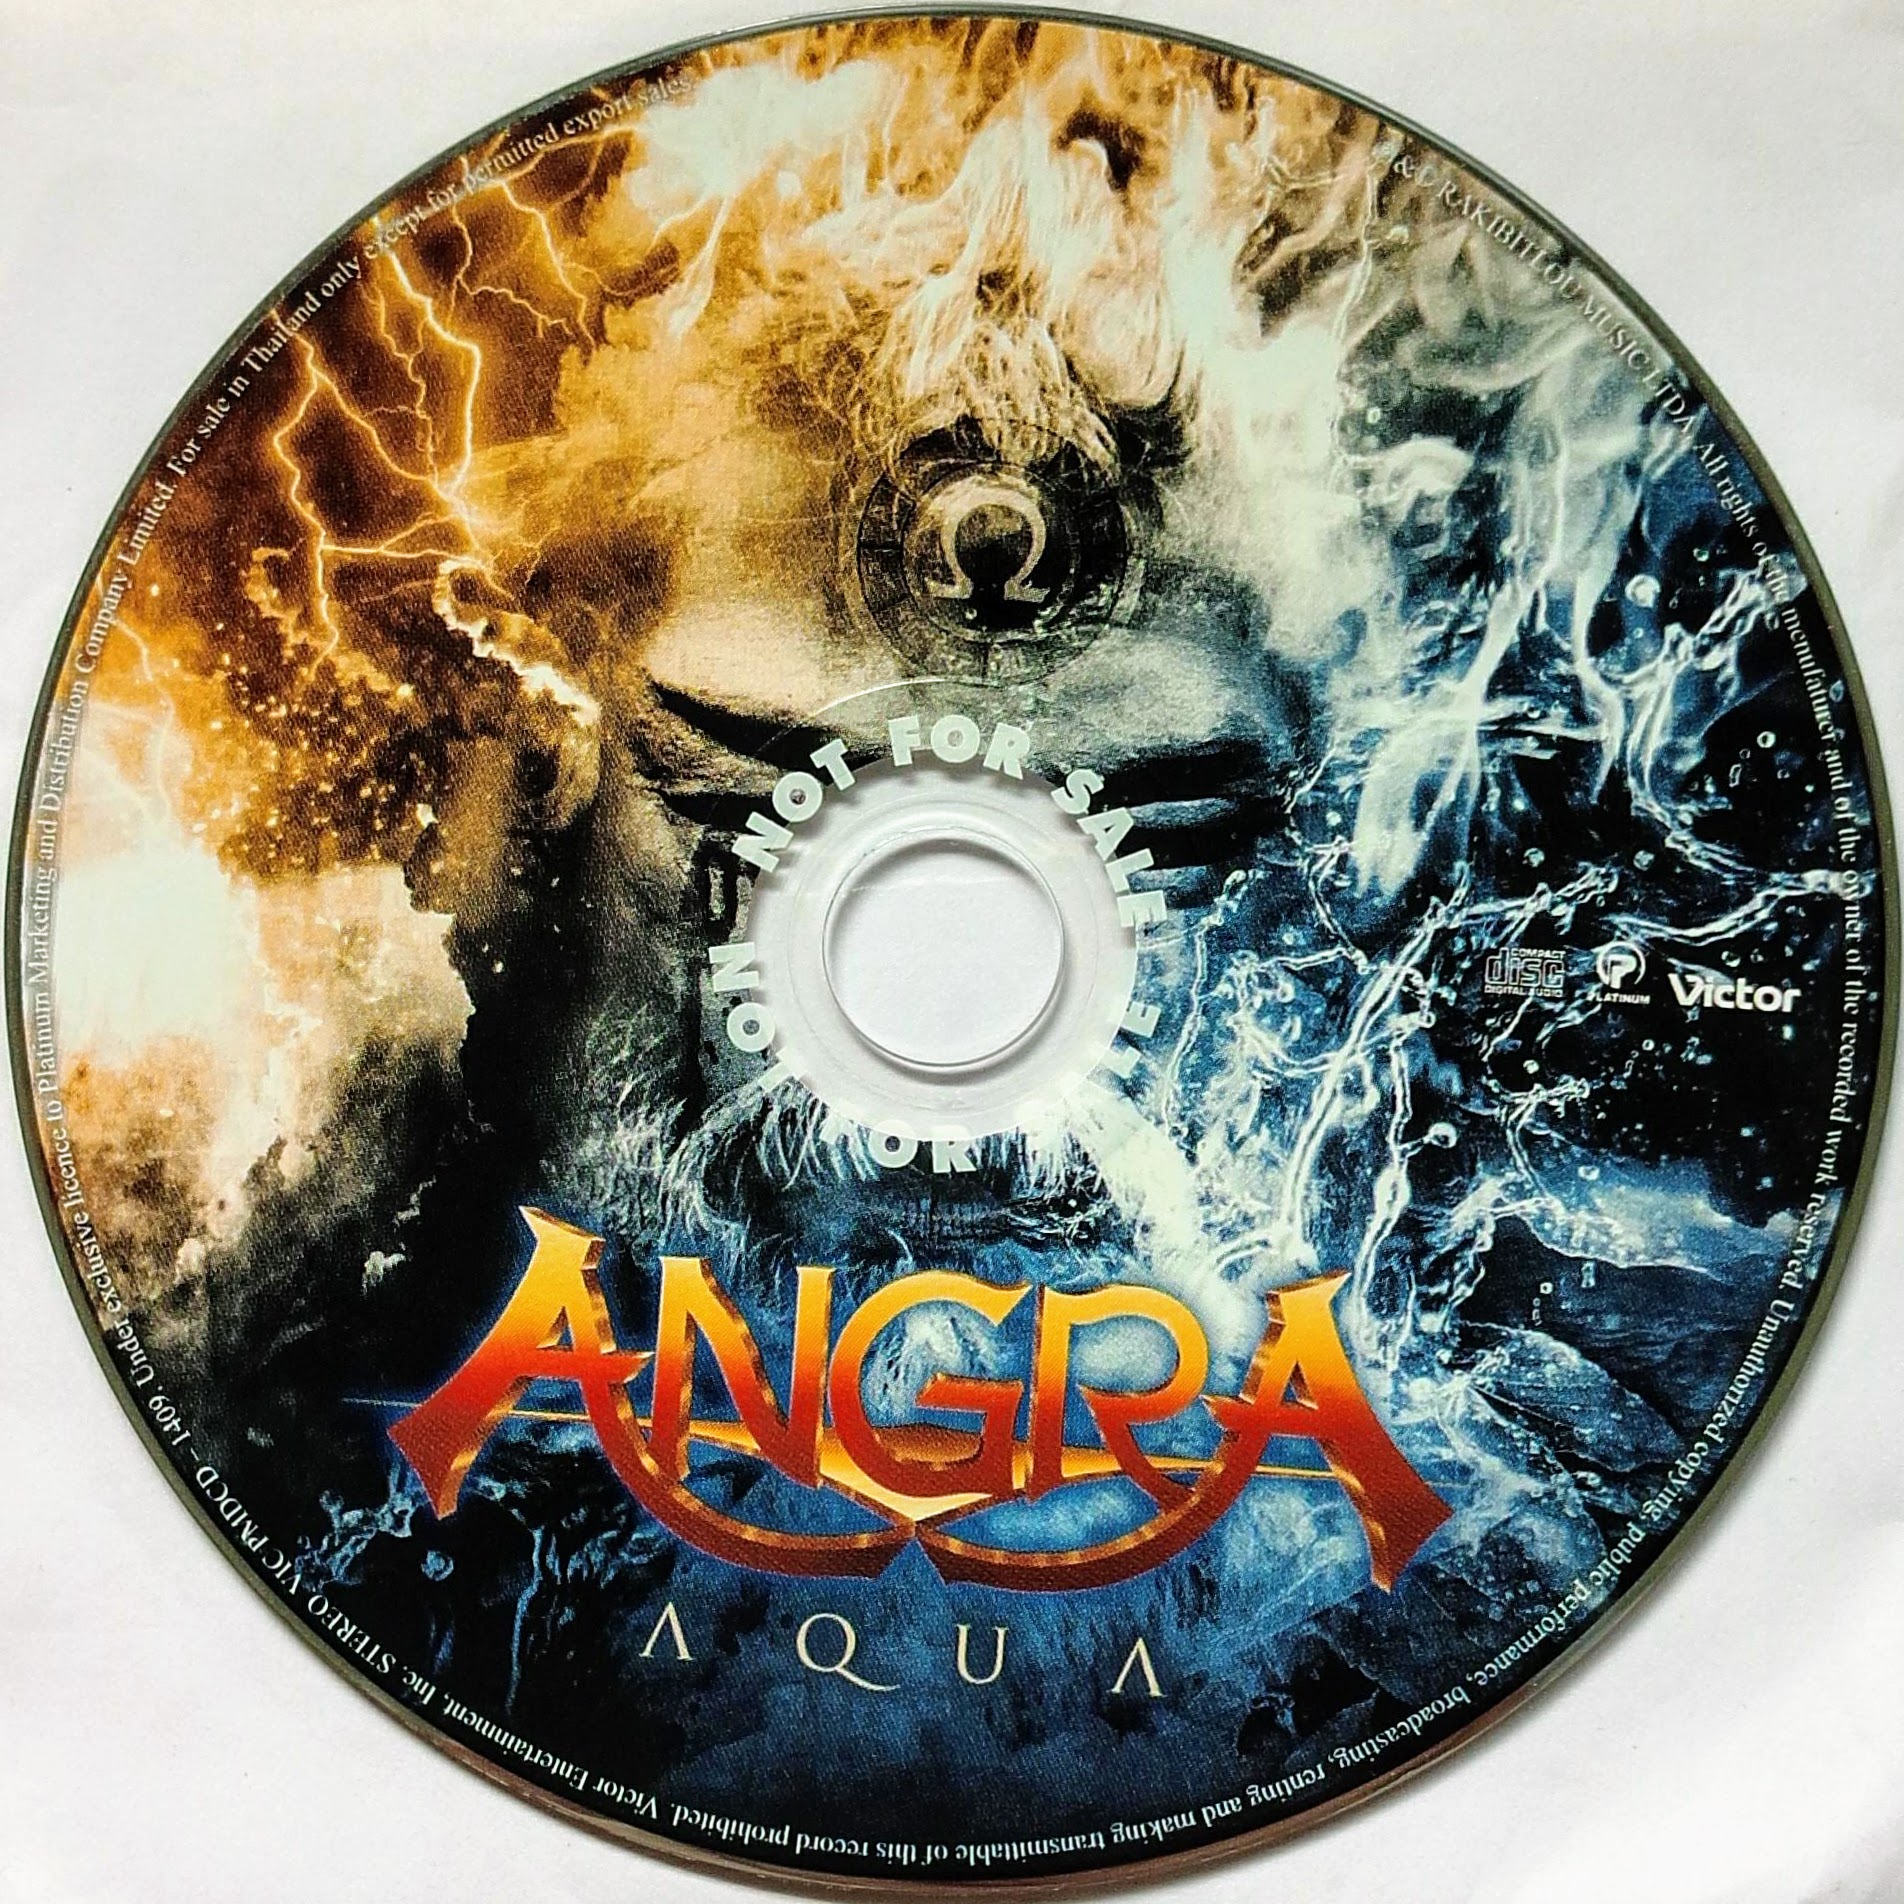 CD (Promotion) Angra - Aqua (CD Only)